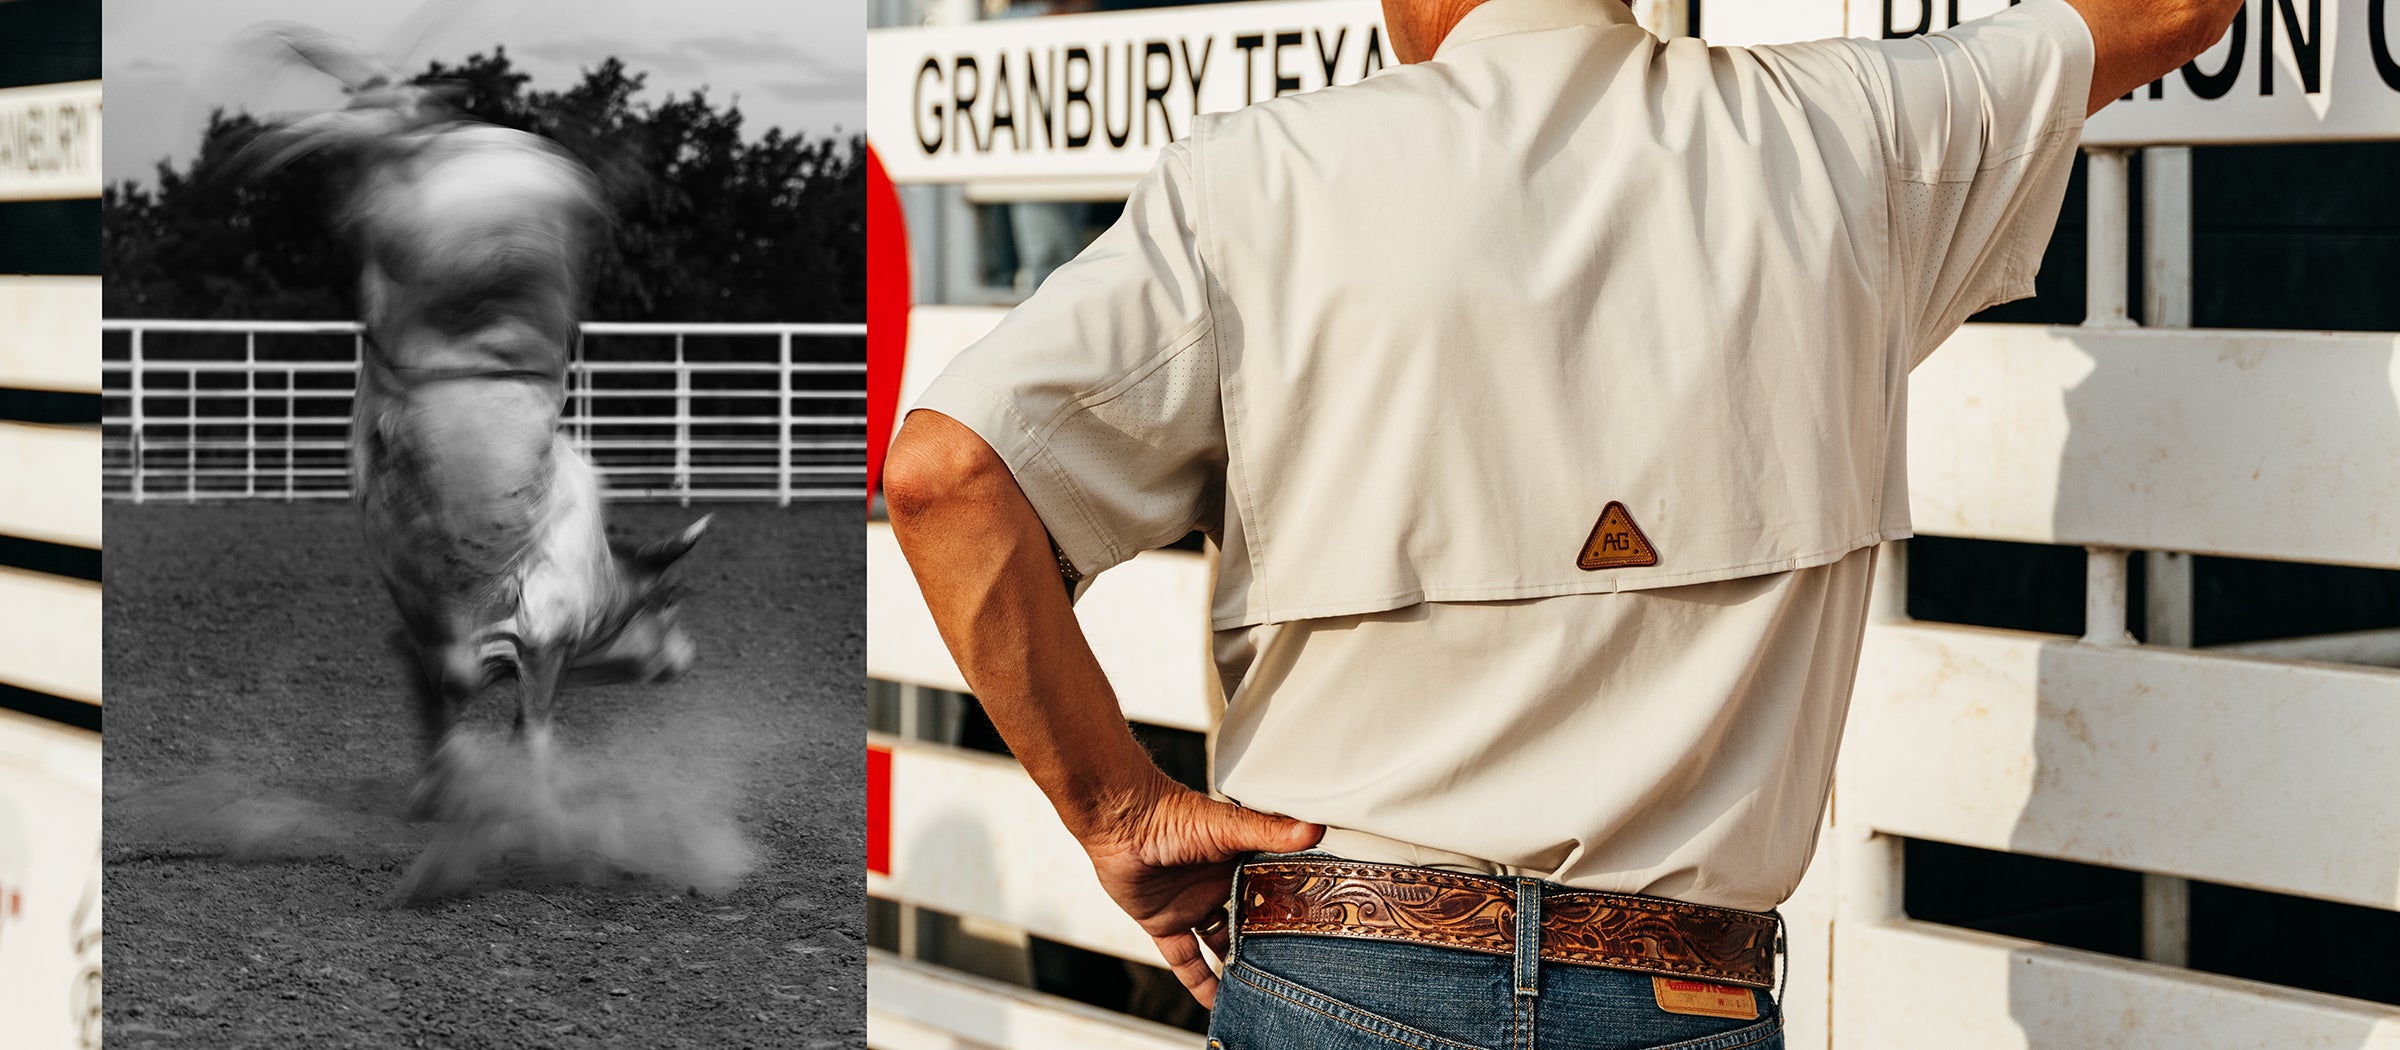 farming ranching AG farm shirt ranch shirt sun shirt UPF30 haybaler farmer rancher rodeo